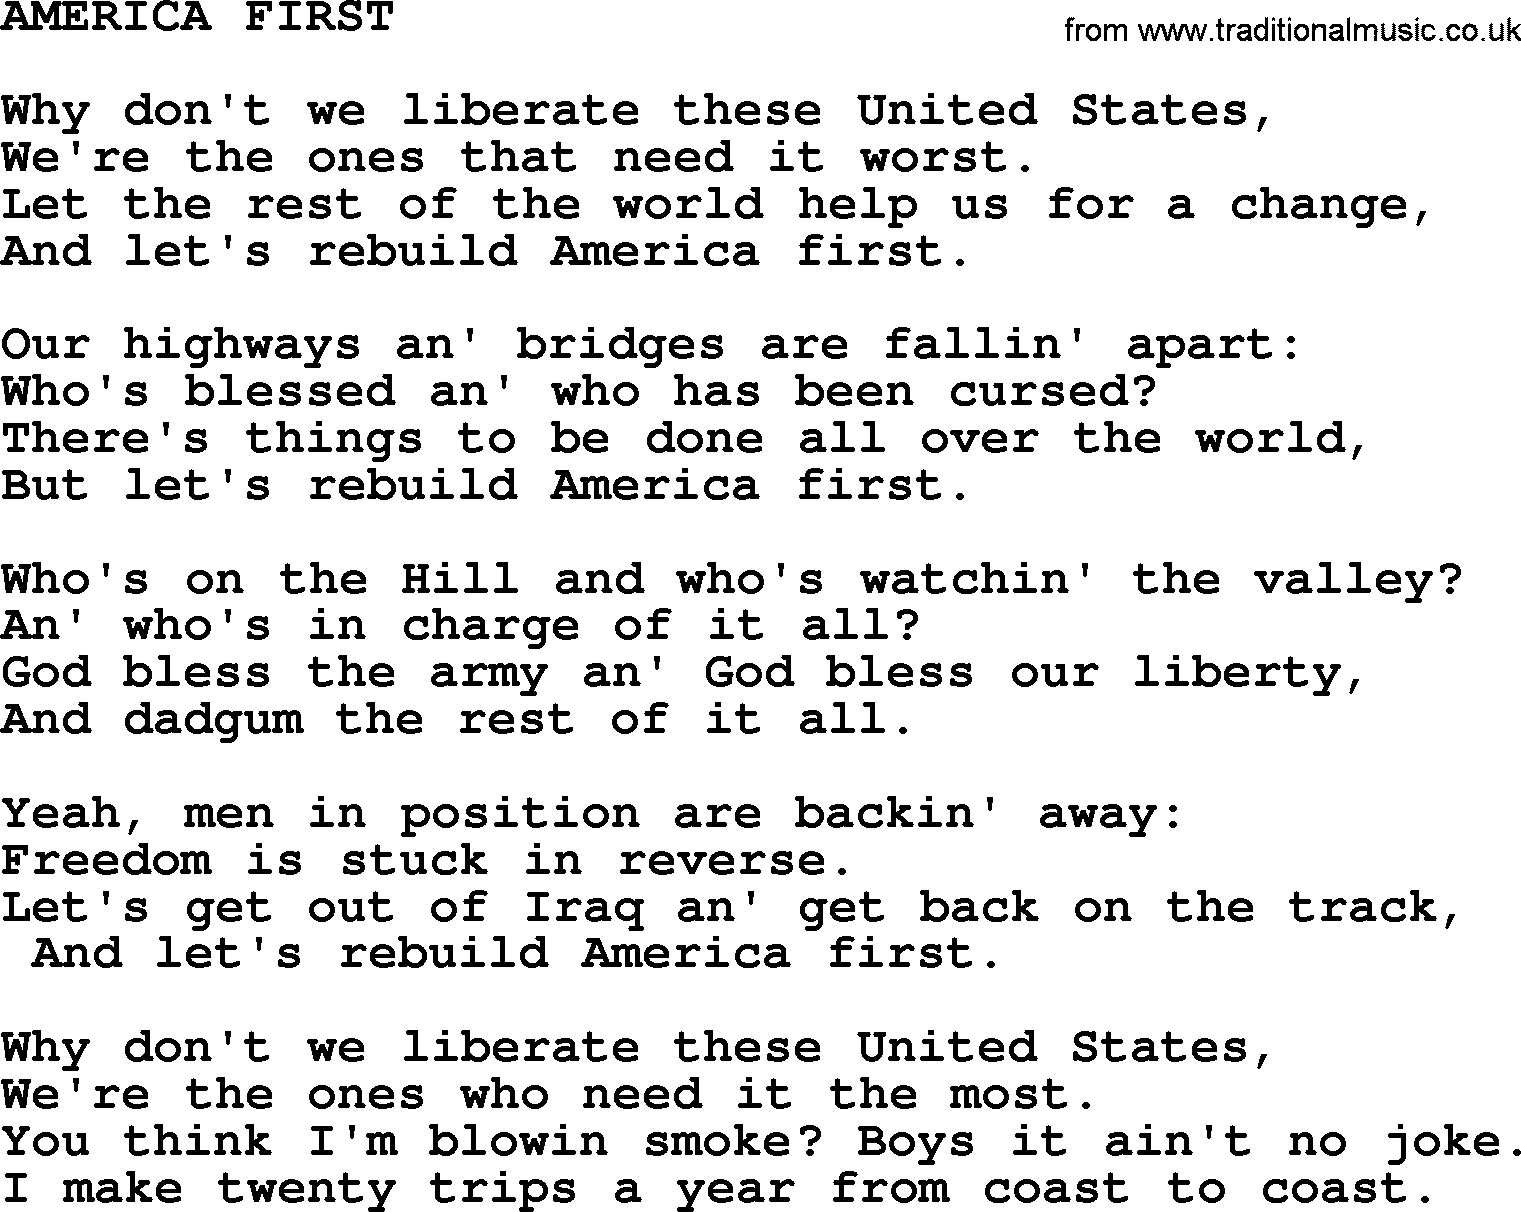 Merle Haggard song: America First, lyrics.